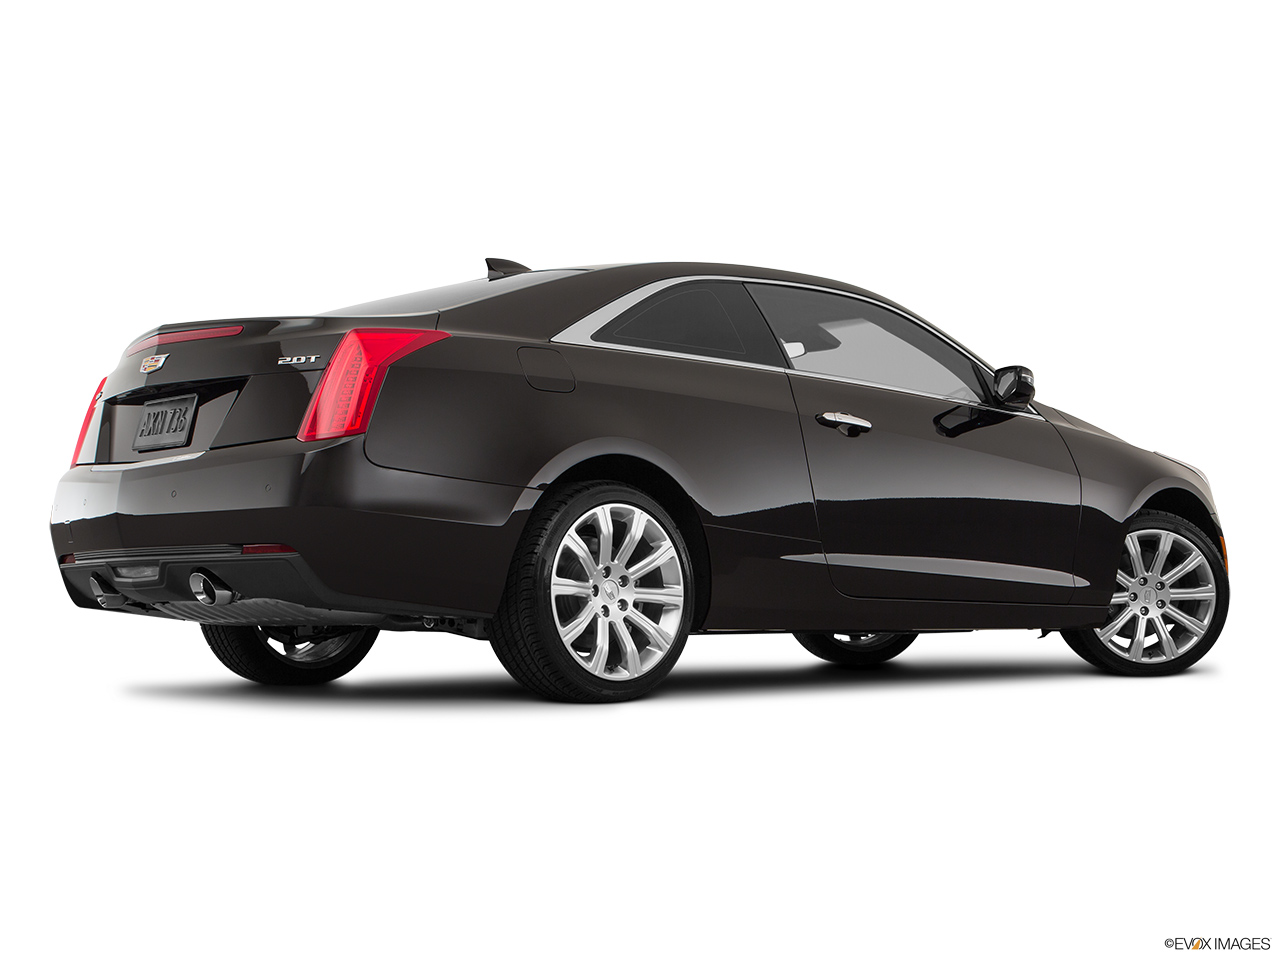 2019 Cadillac ATS Luxury Low/wide rear 5/8. 